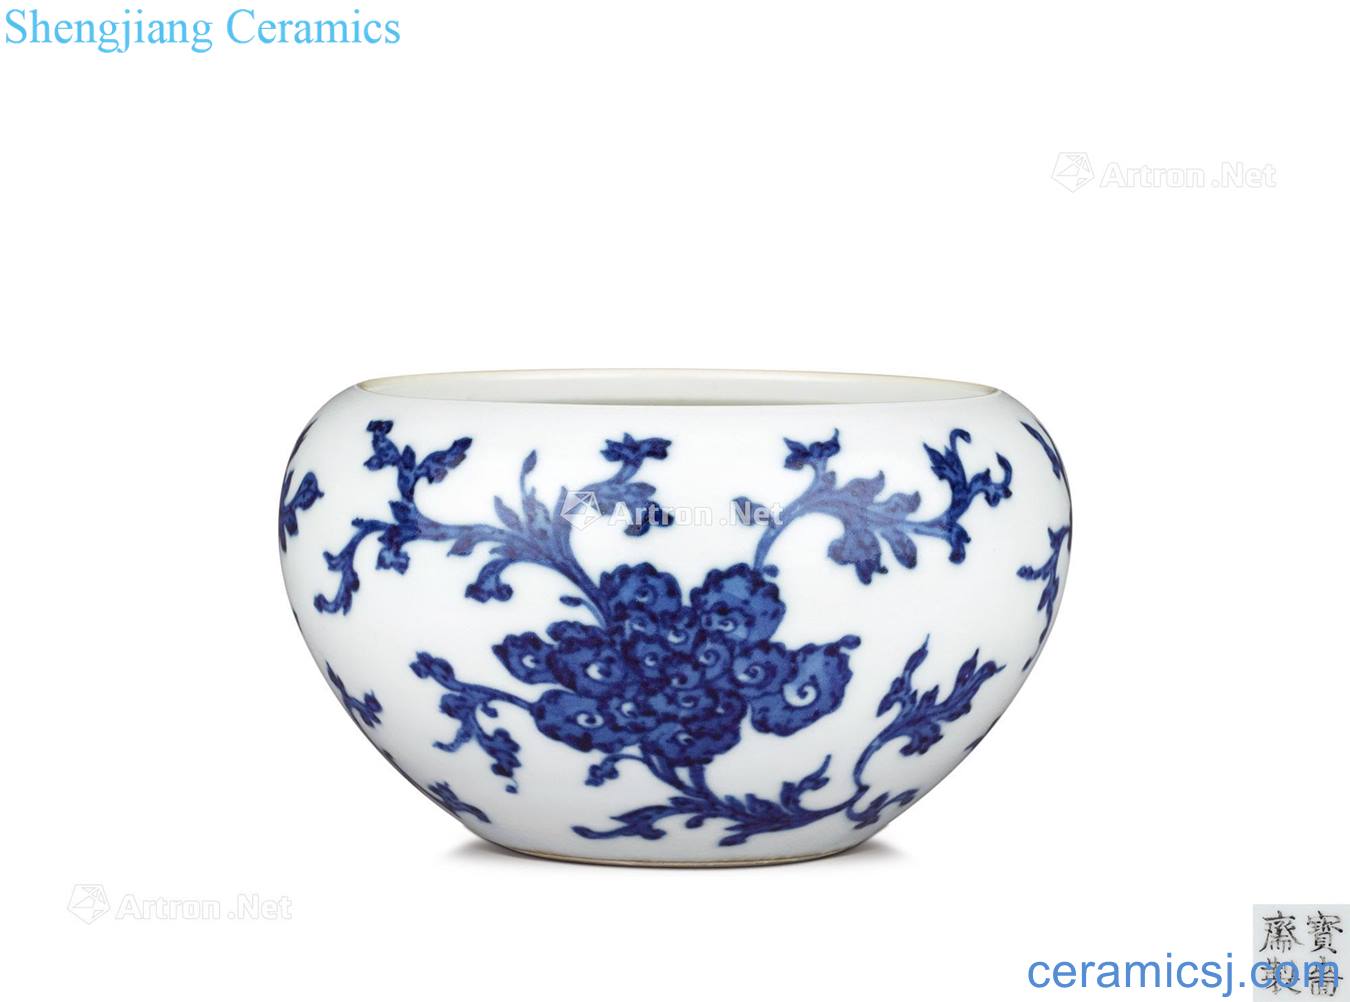 Qing qianlong "treasure increase lent system" model of blue and white ruffled lotus flower grain port